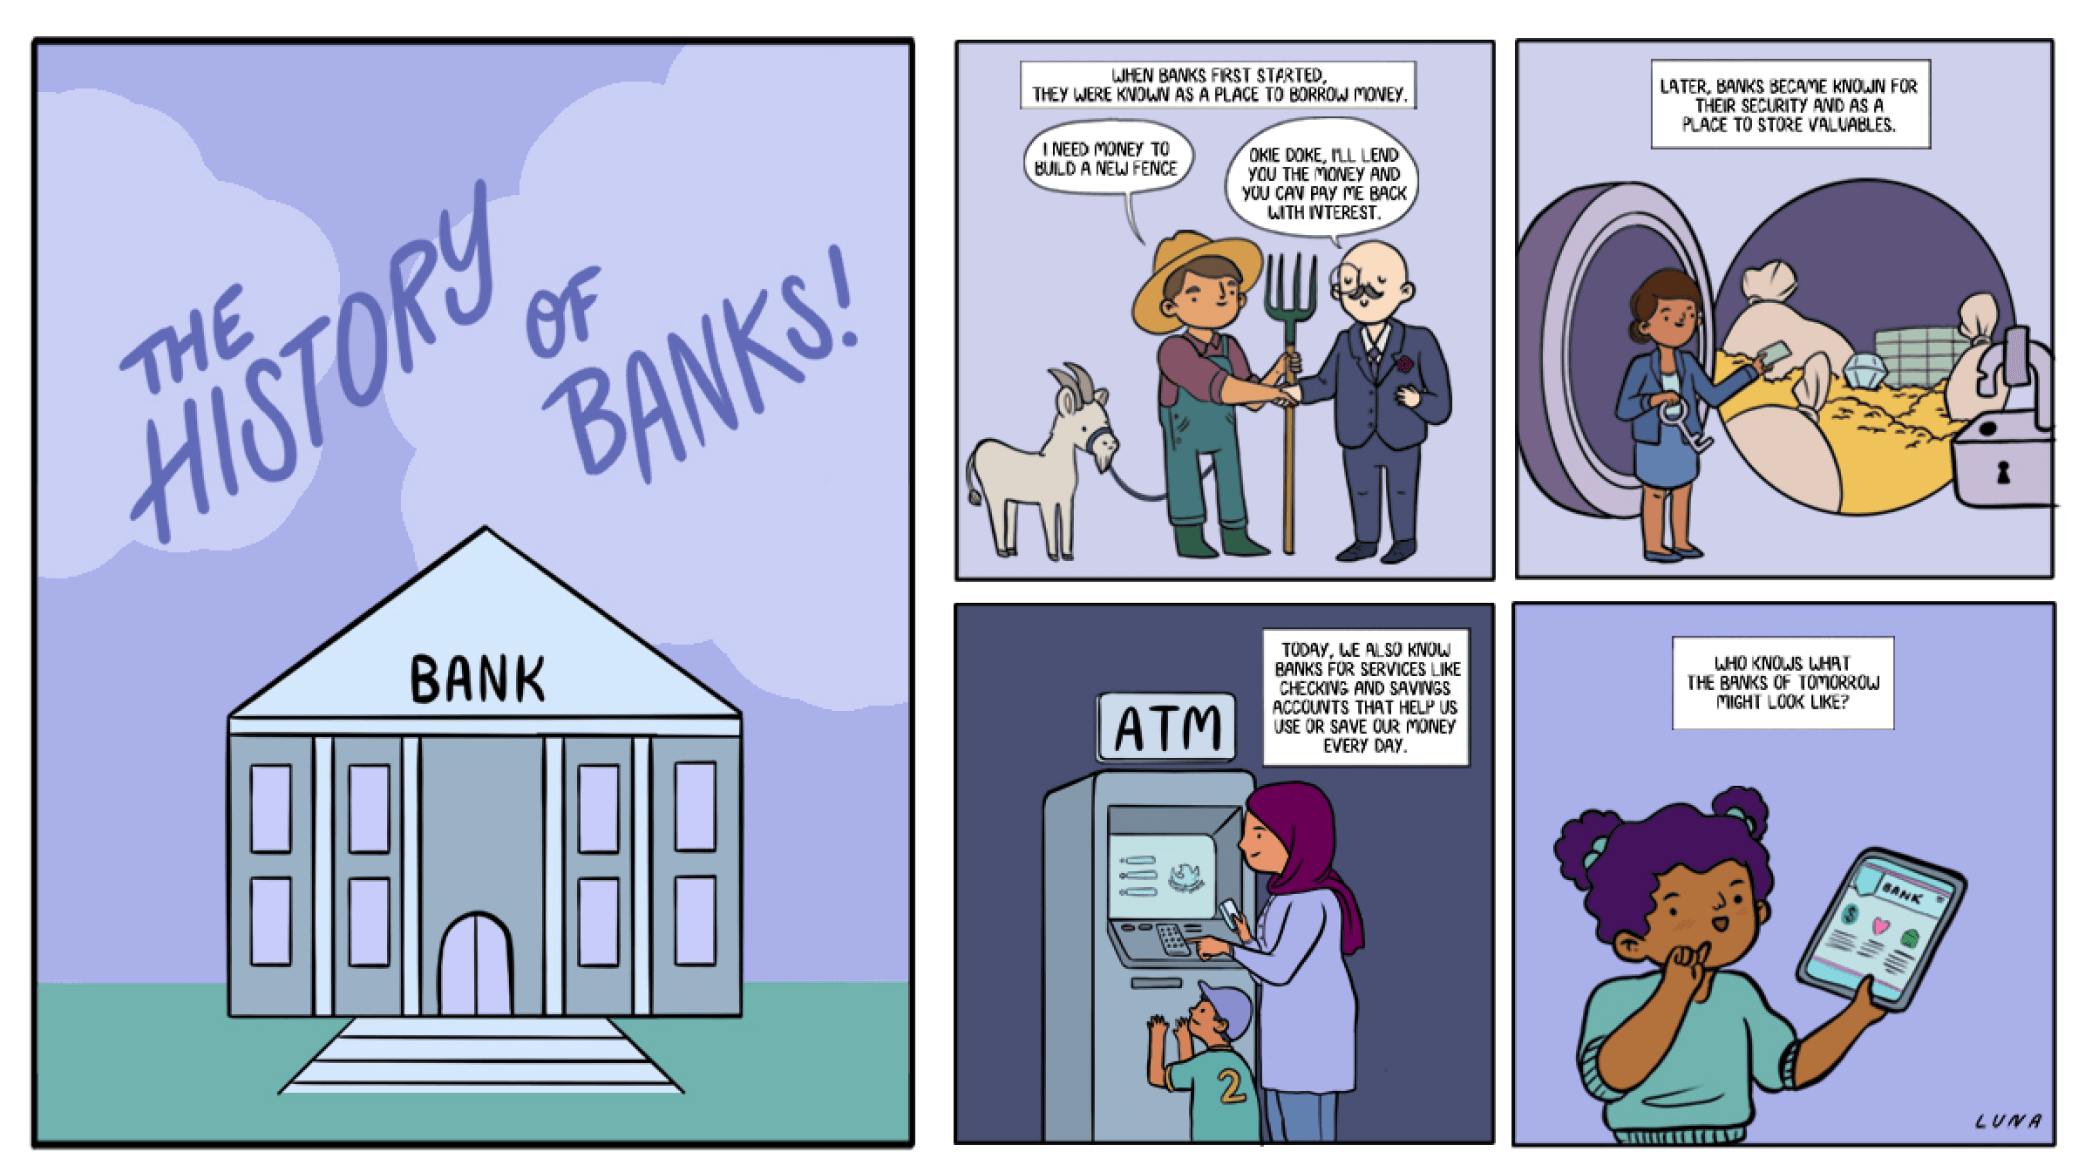 "The History of Banks!" comic